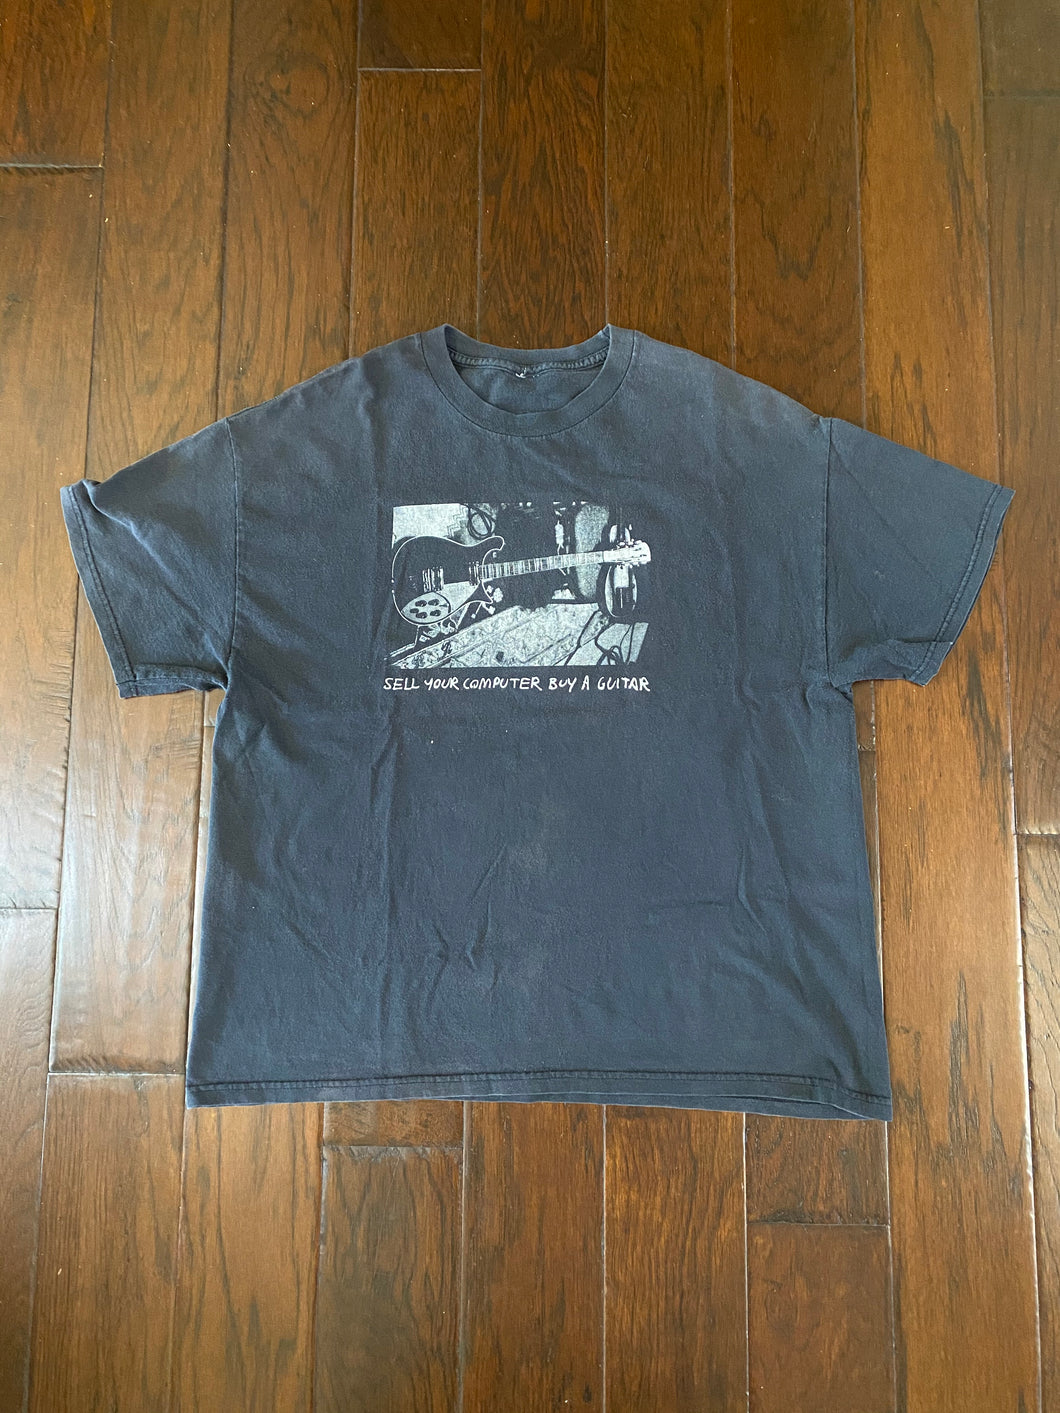 Tom Petty 2003 “Buy a Guitar” Vintage Distressed T-shirt